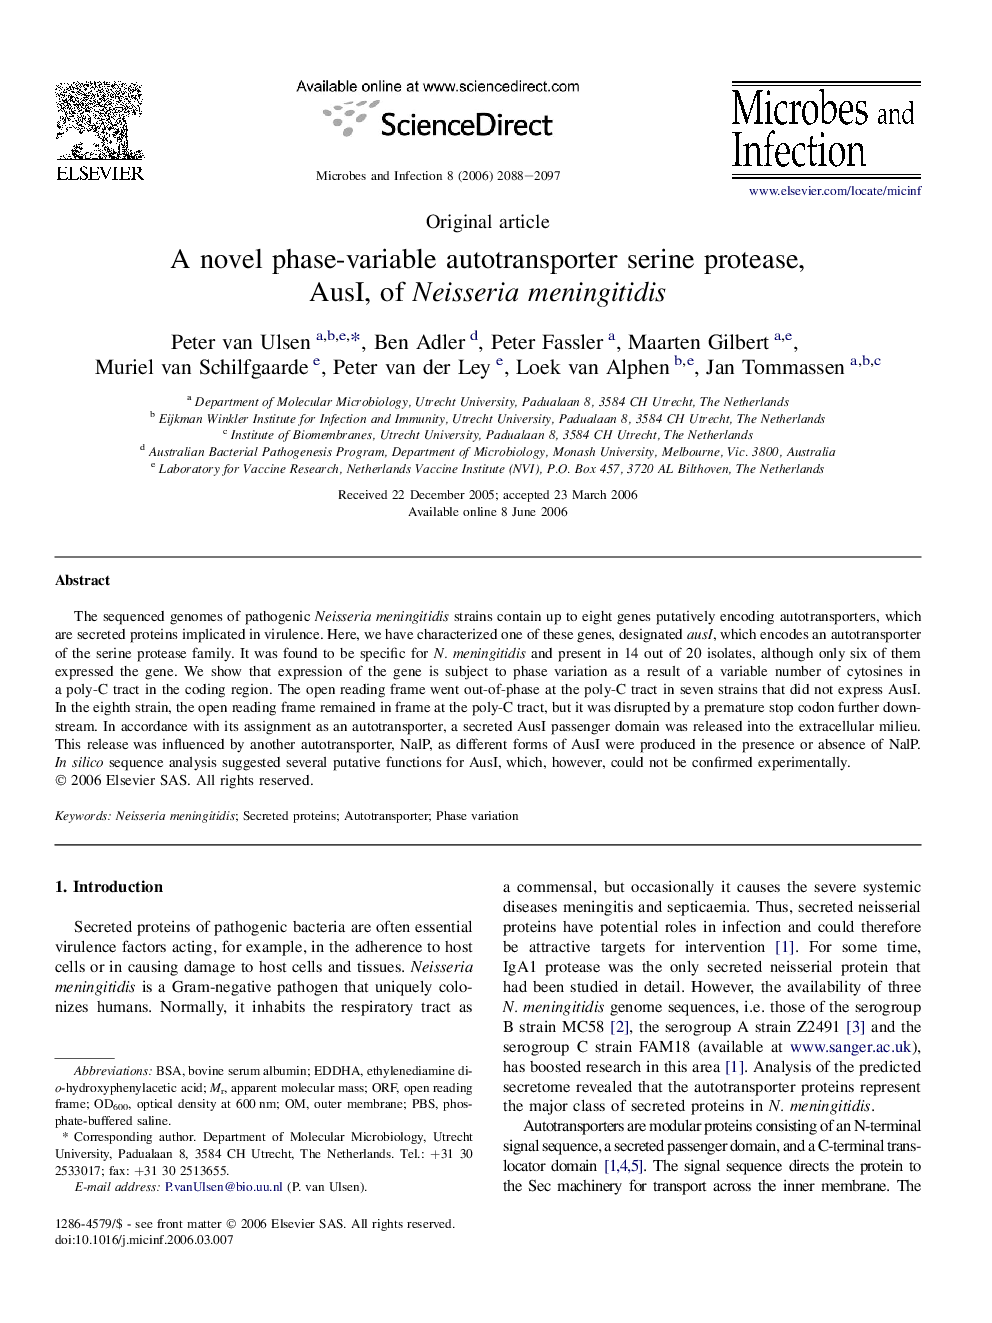 A novel phase-variable autotransporter serine protease, AusI, of Neisseria meningitidis